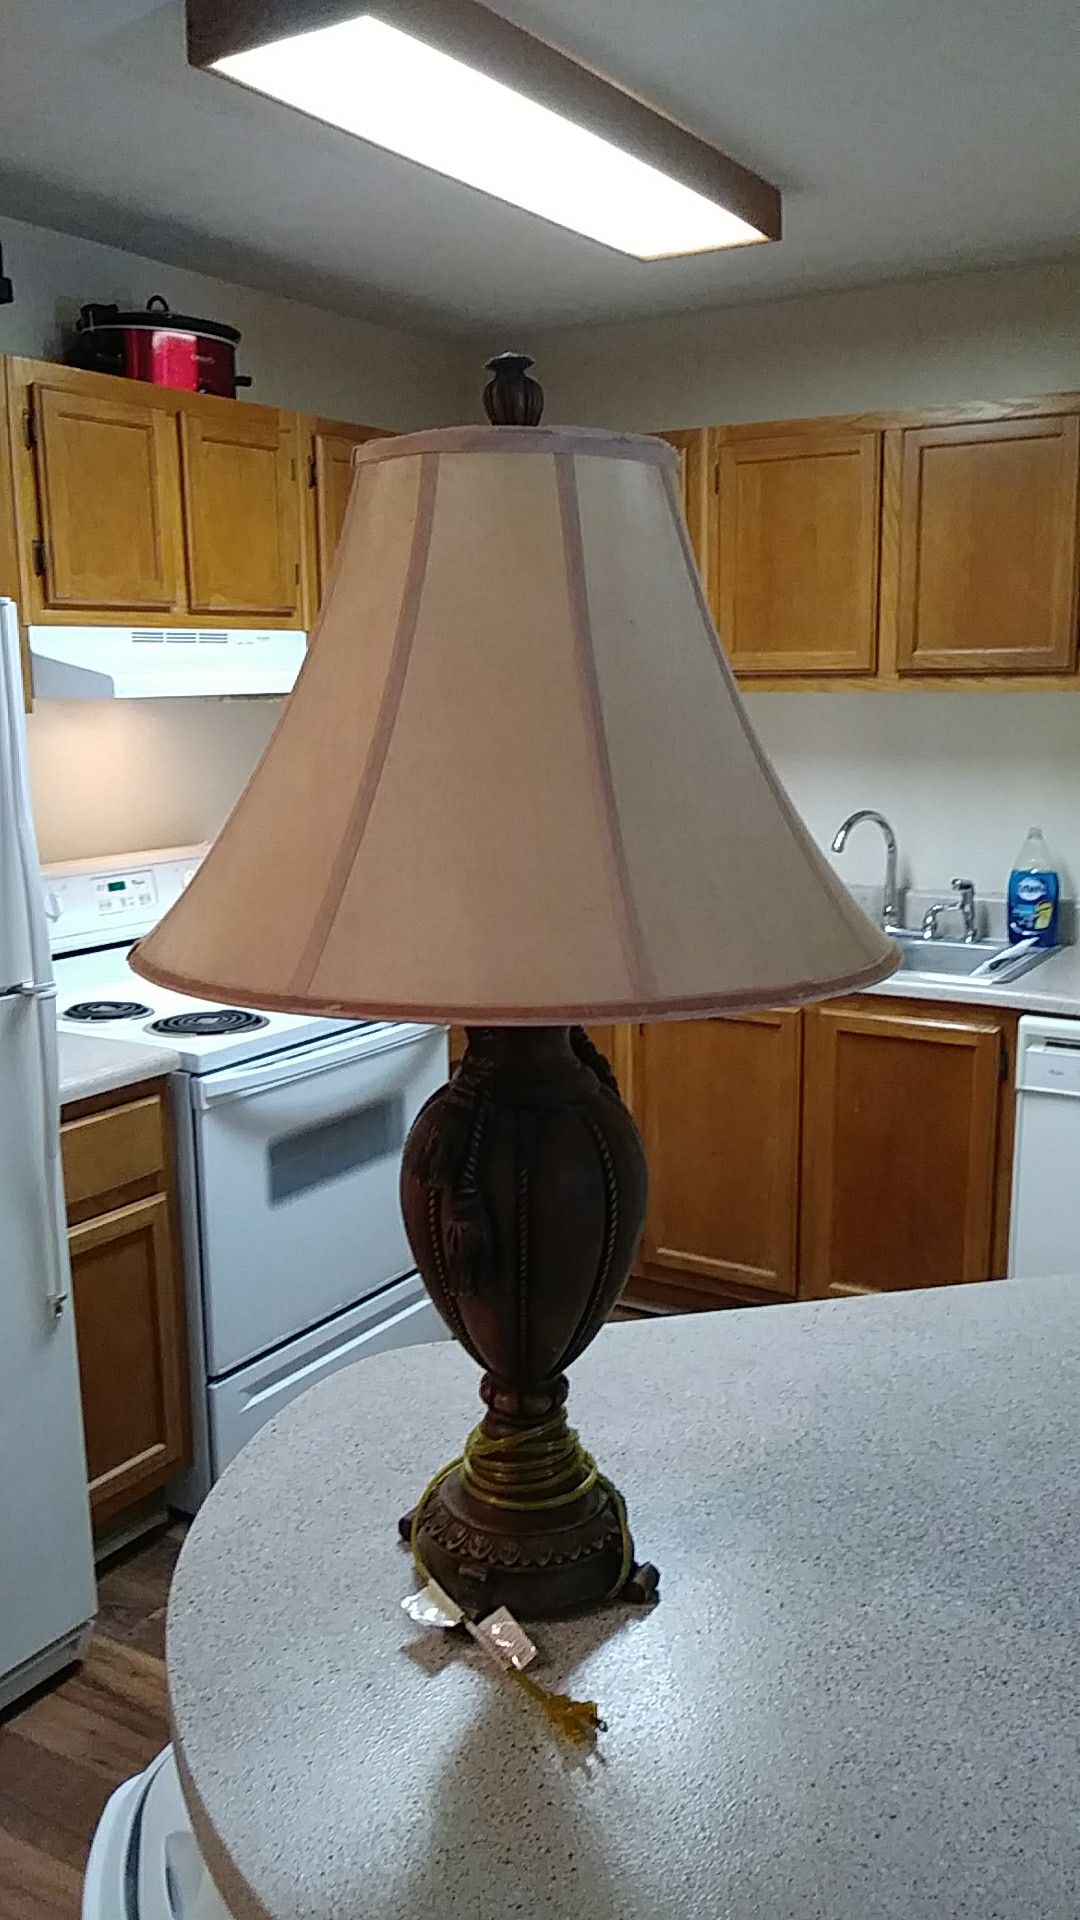 Really nice lamp.. Brownish and a tan lamp shade. Dont have enough room